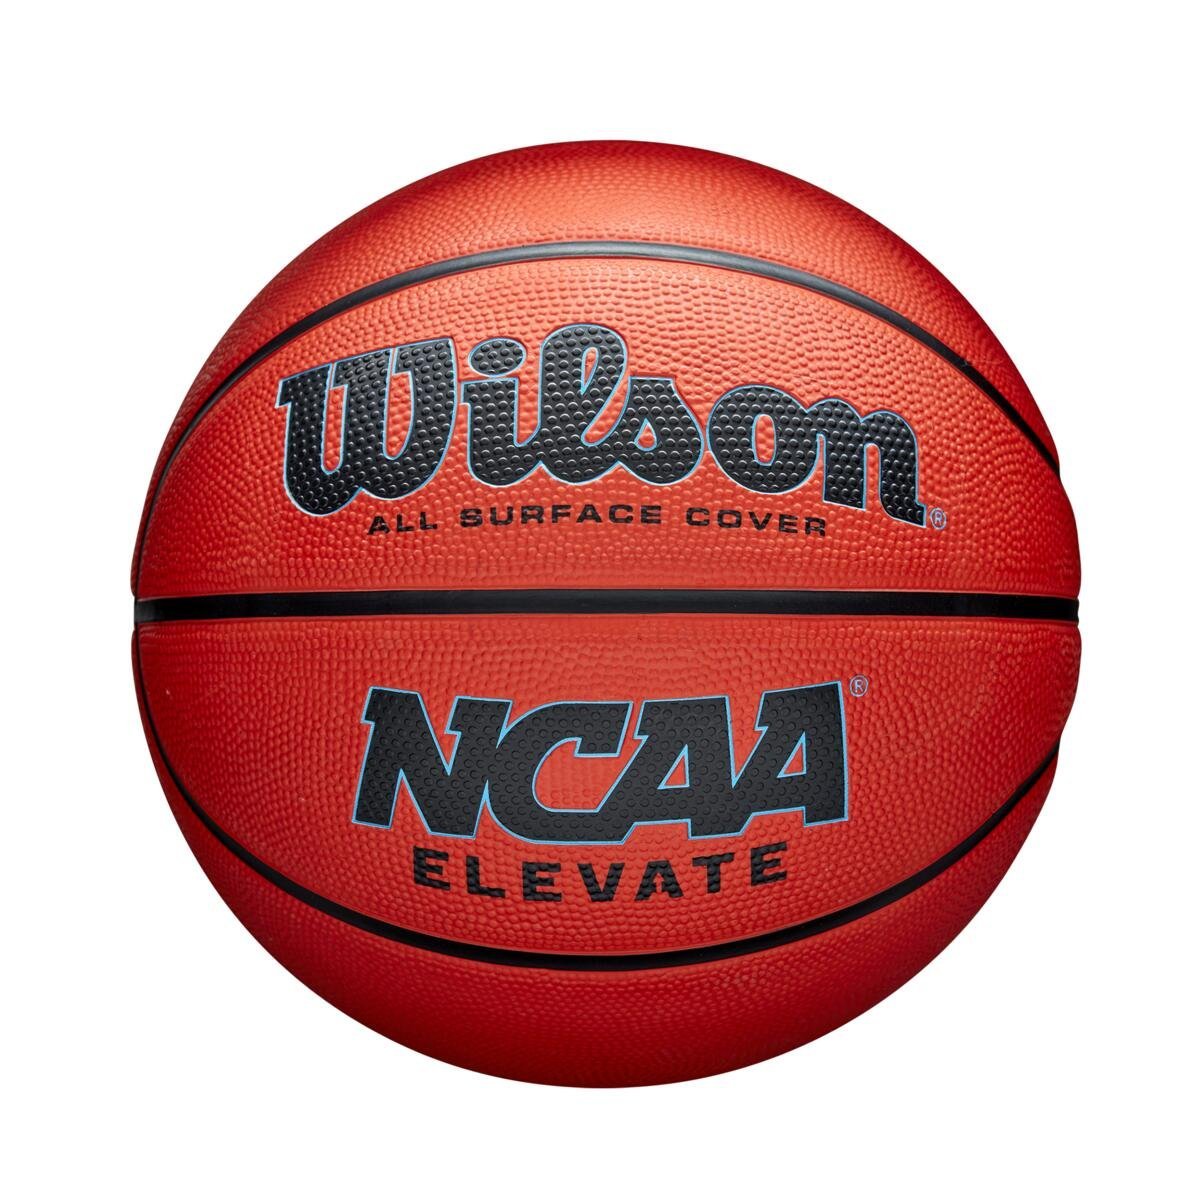 Lopta Wilson NCAA Elevate Bskt - oranžová/čierna